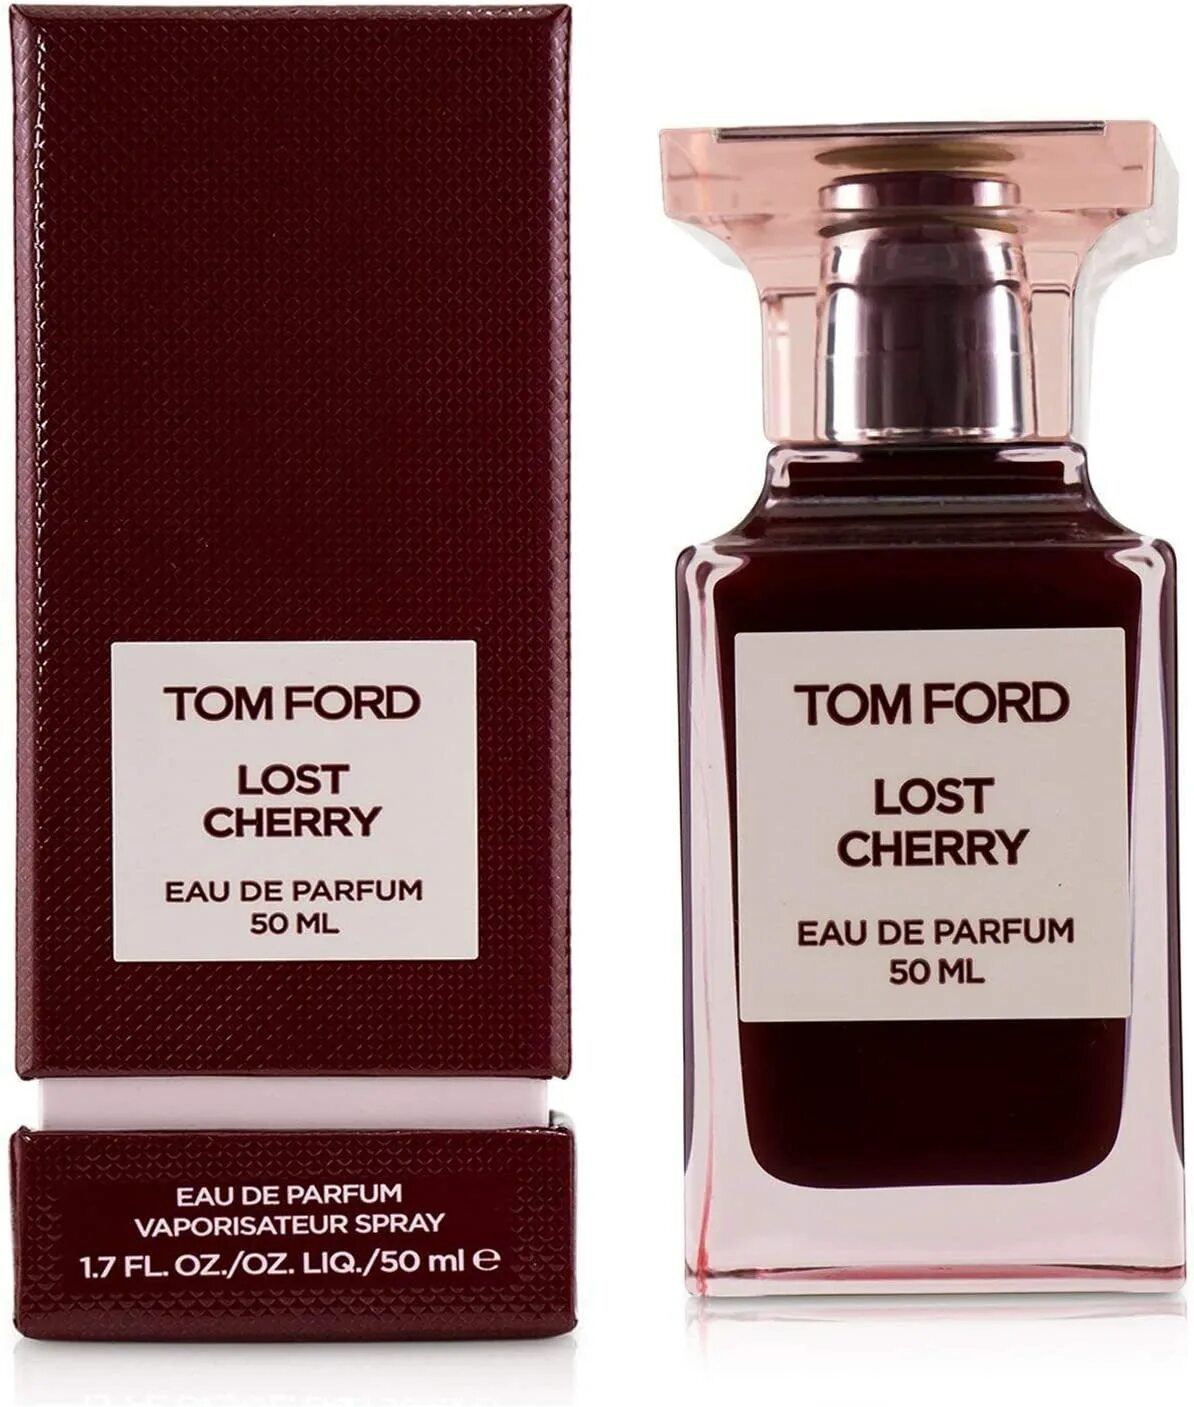 Том форт оригинал. Tom Ford Lost Cherry 50 ml. Tom Ford Lost Cherry 30ml. Том Форд лост черри 100 мл. Tom Ford Lost Cherry EDP 100 ml.